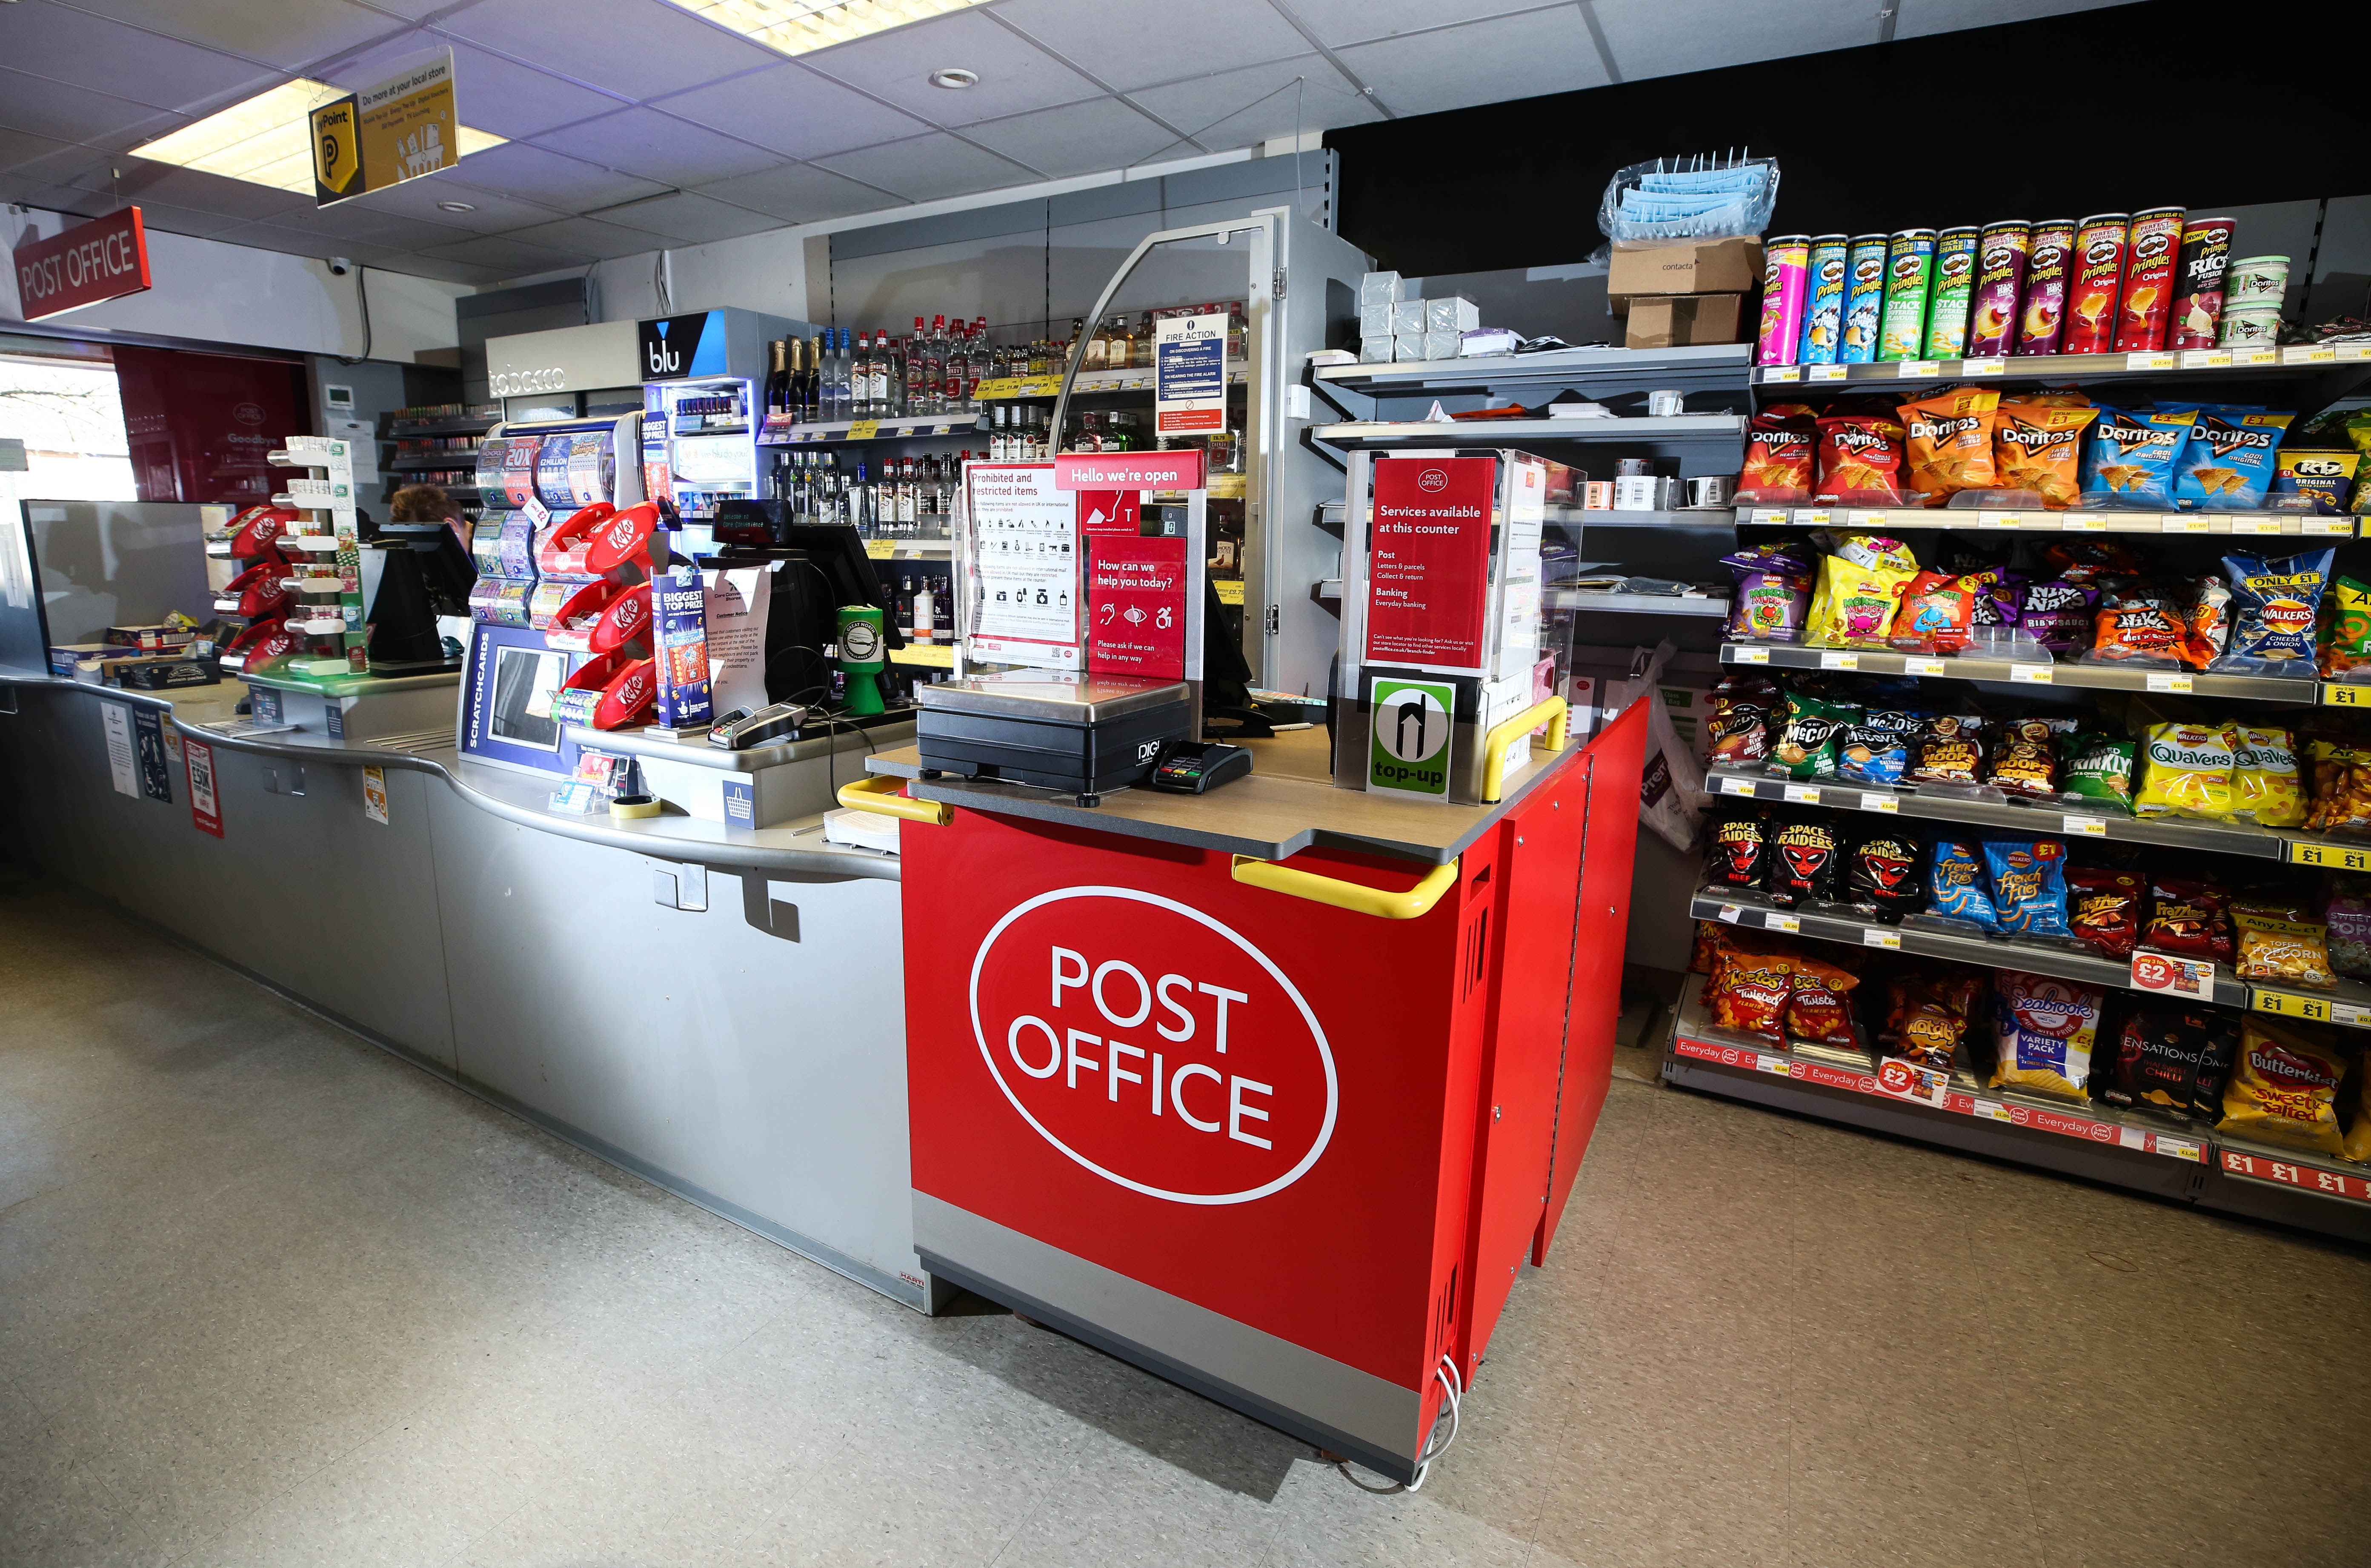 Post Office impacts Scottish economy to tune of £292 million